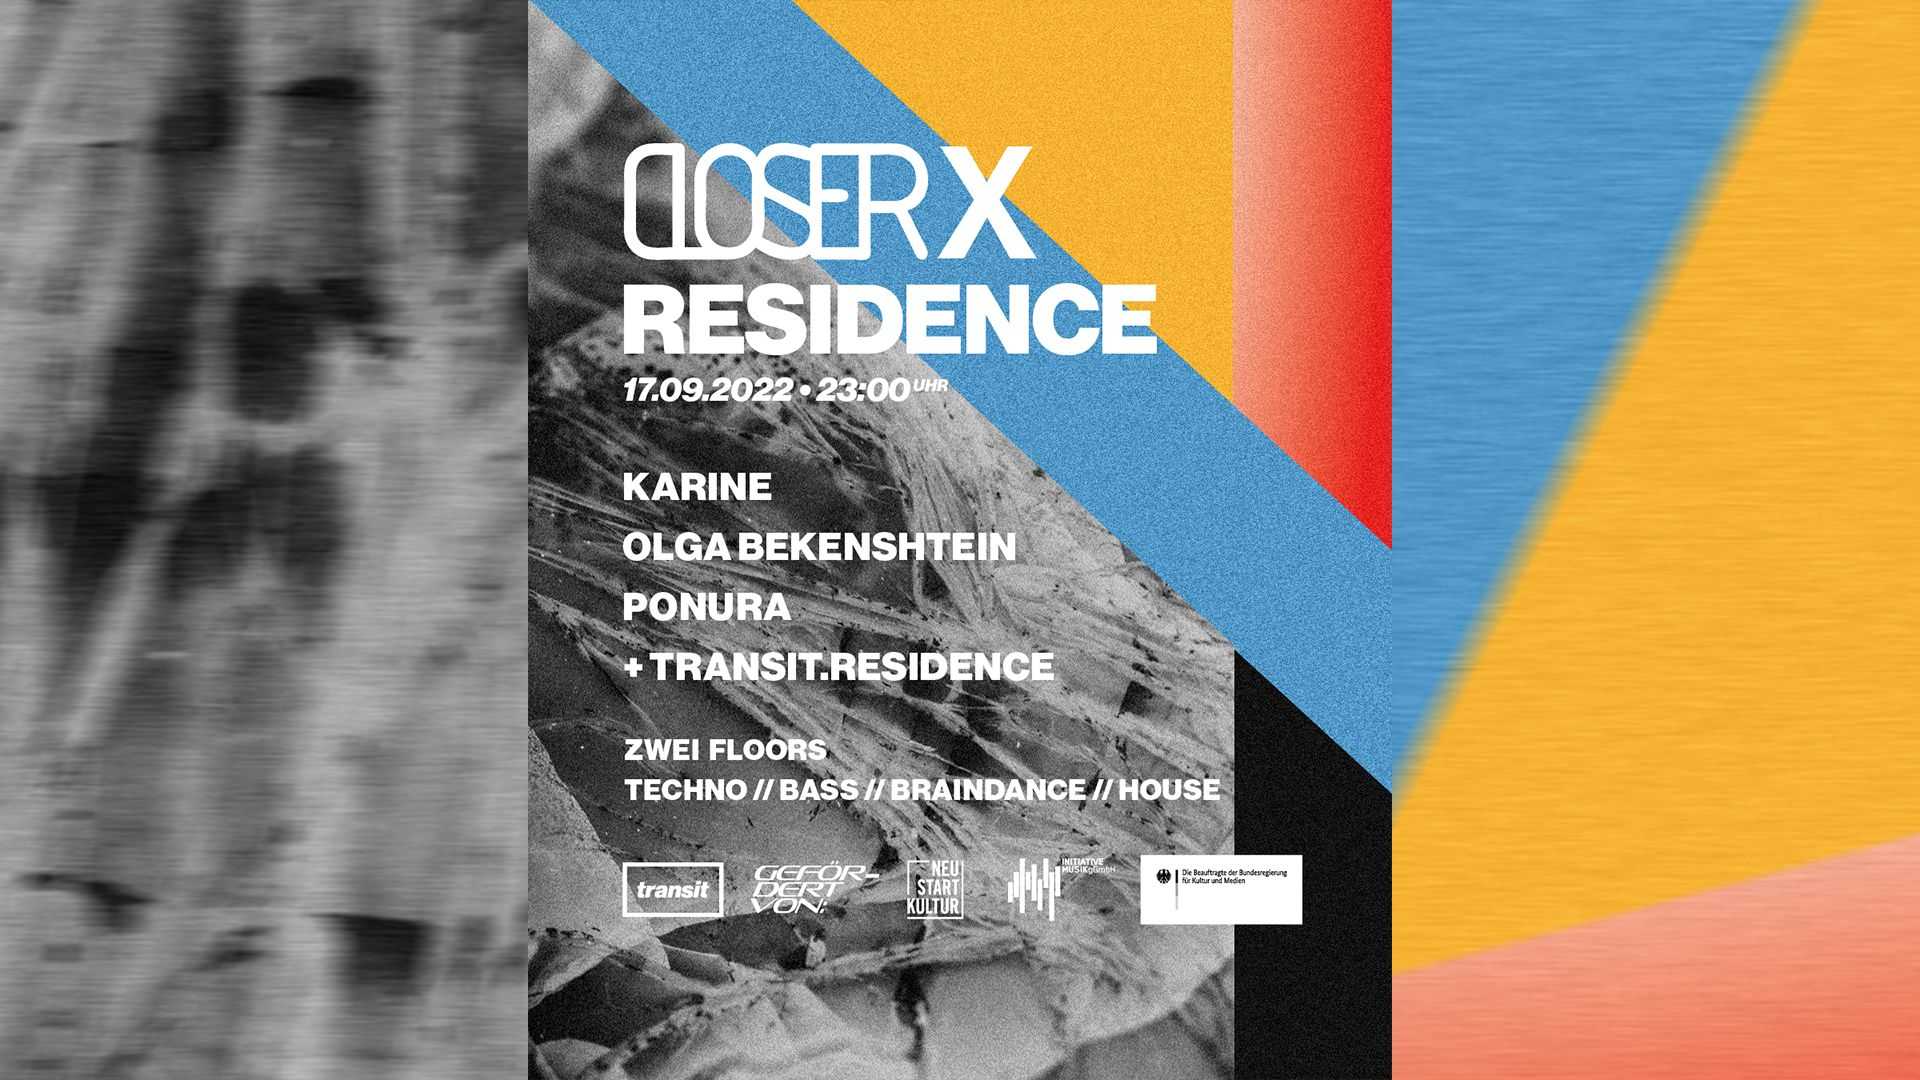 Closer x Residence 